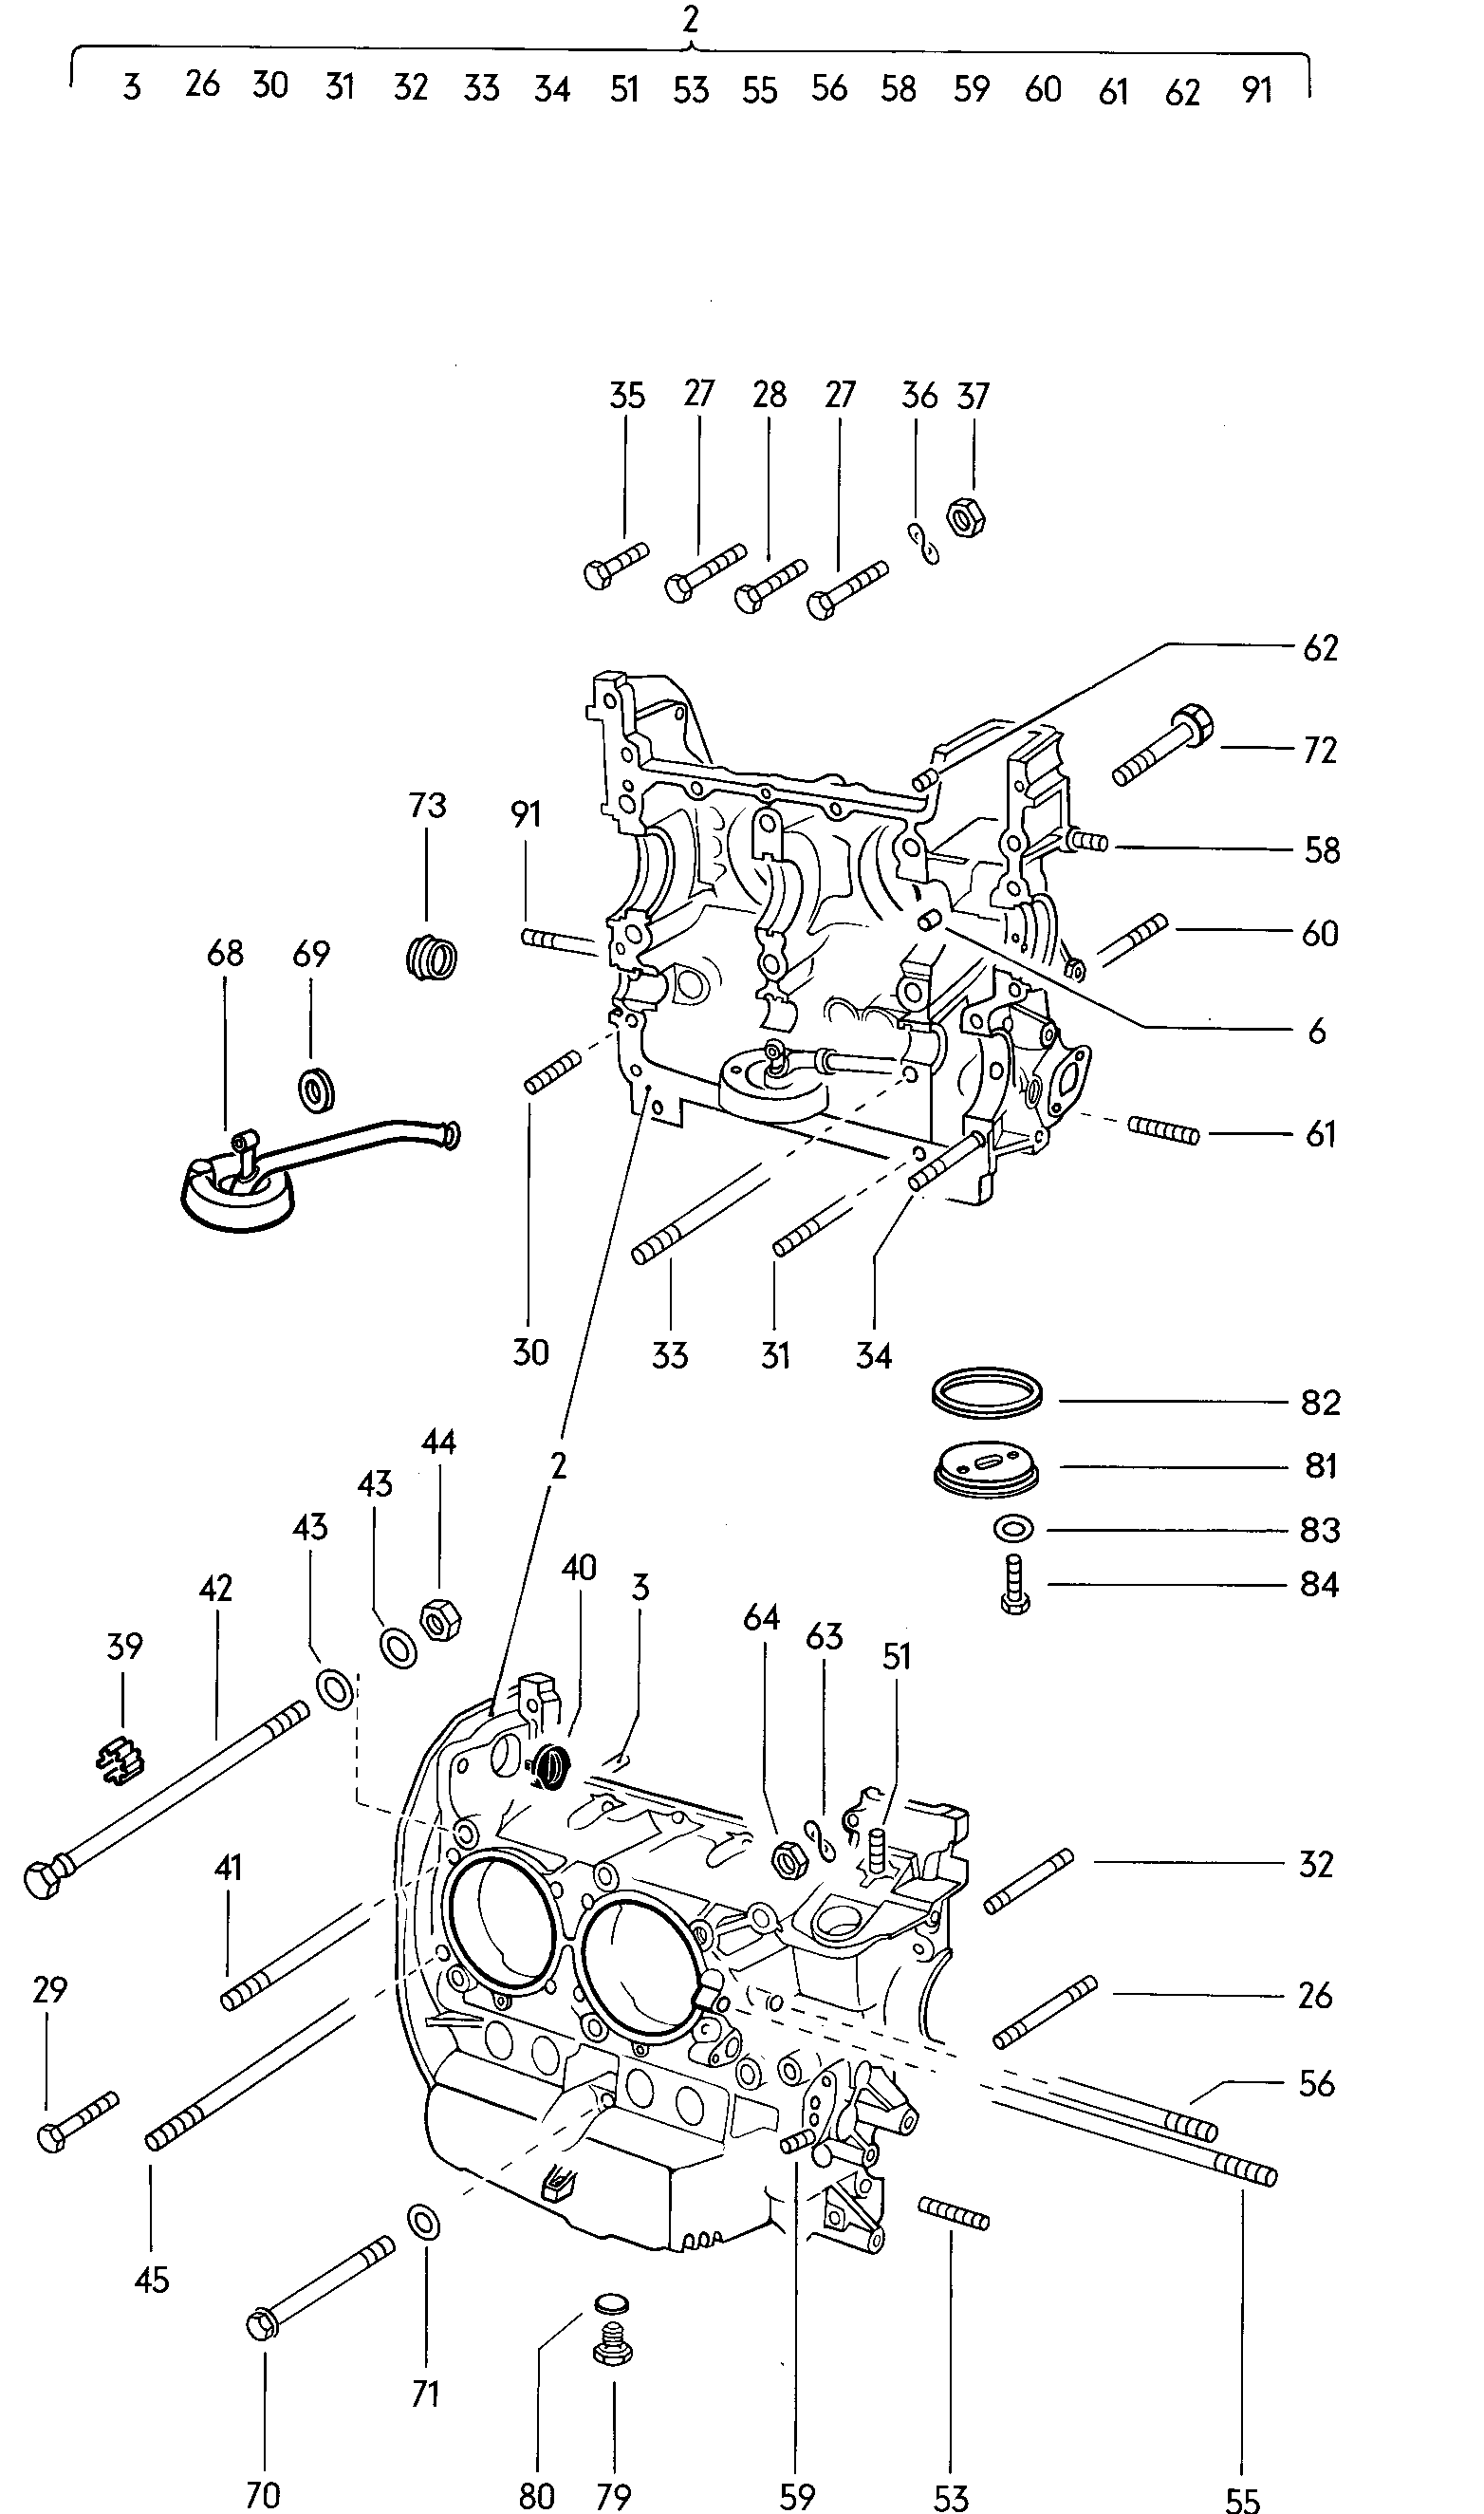 bevestigingsdelen voor motor
en versnellingsbak - Typ 2/syncro(T2)  